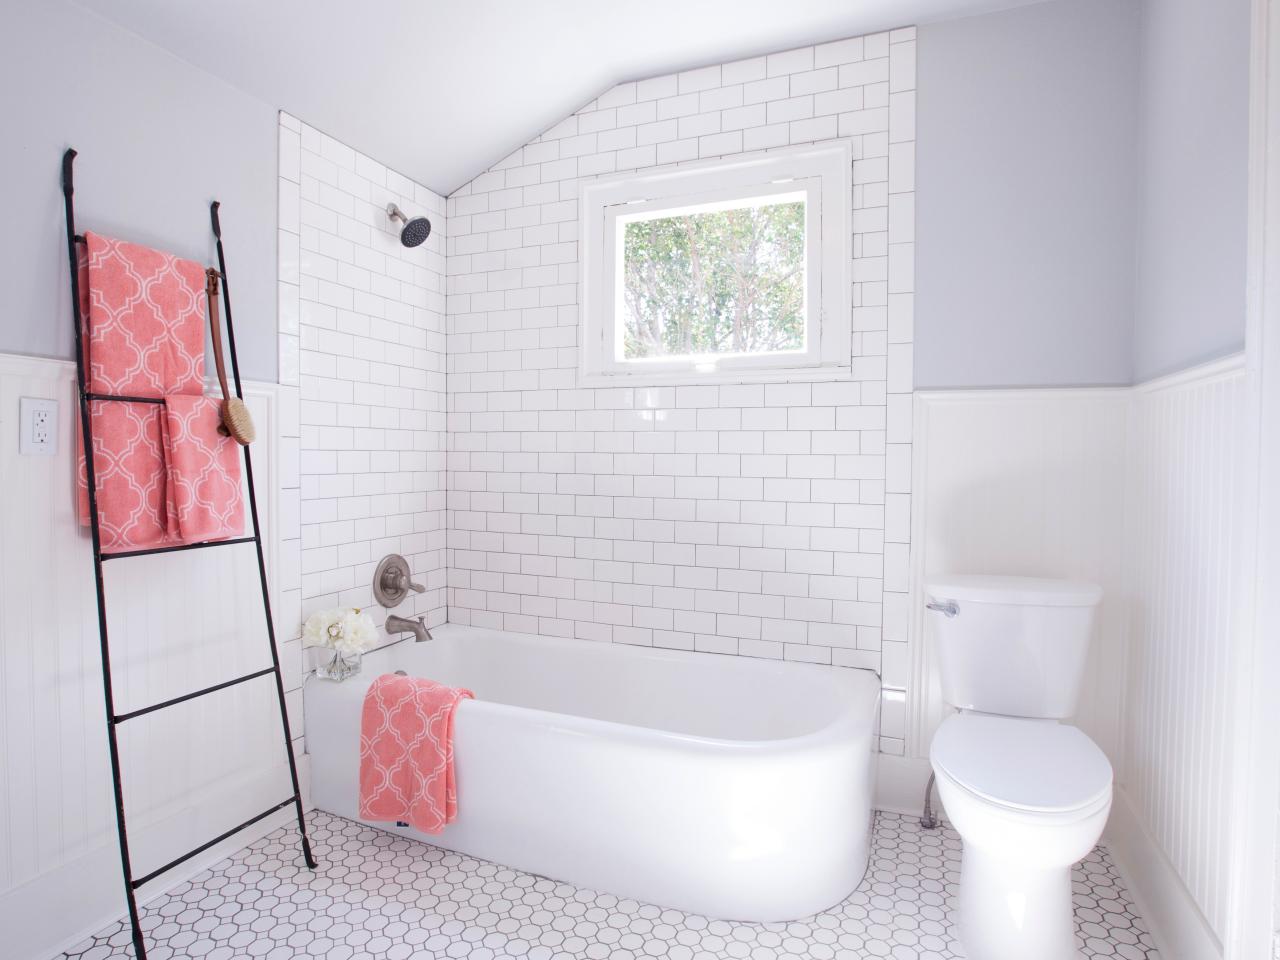 Ceramic Tile Flooring Tips Diy, How To Put Down Tile Flooring In Bathroom